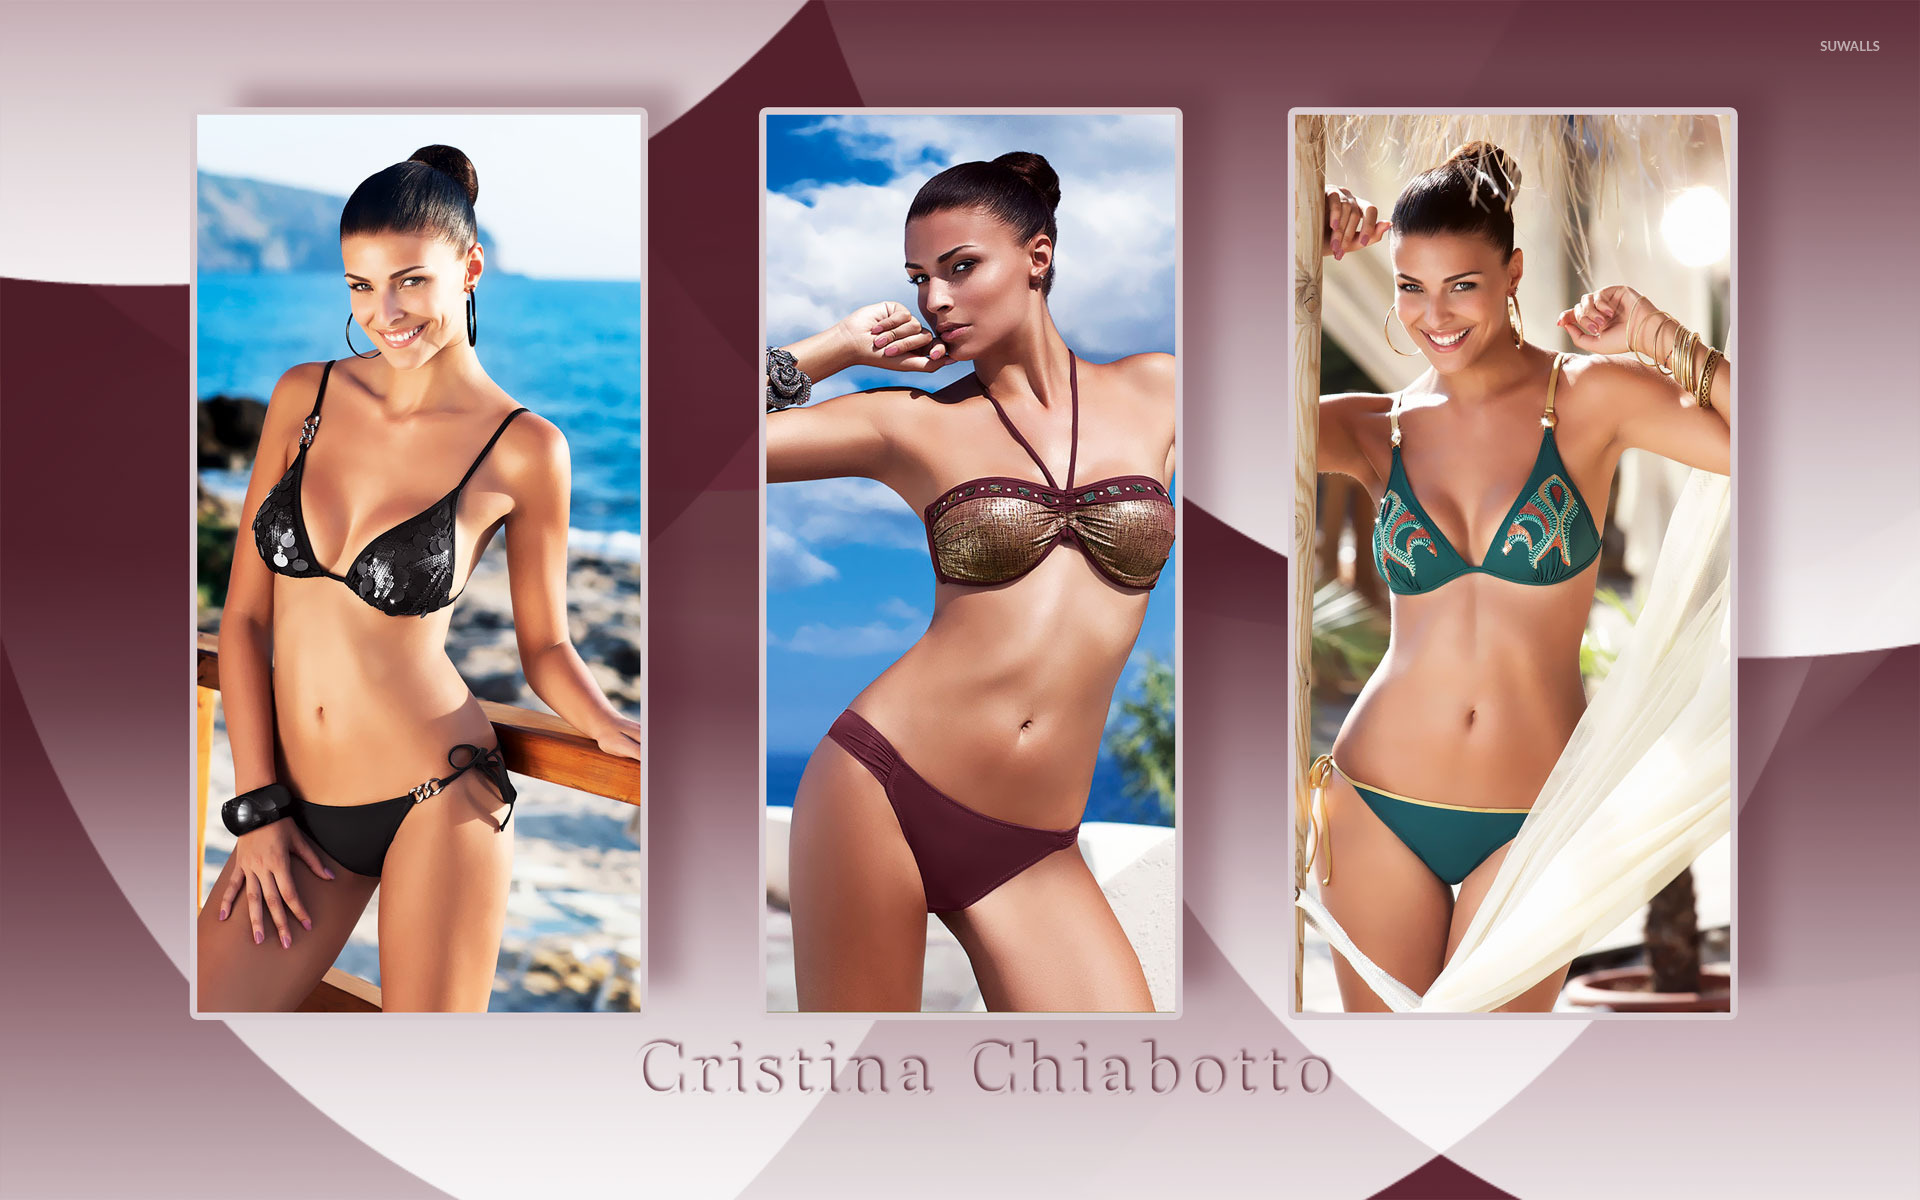 Cristina Chiabotto Wallpapers